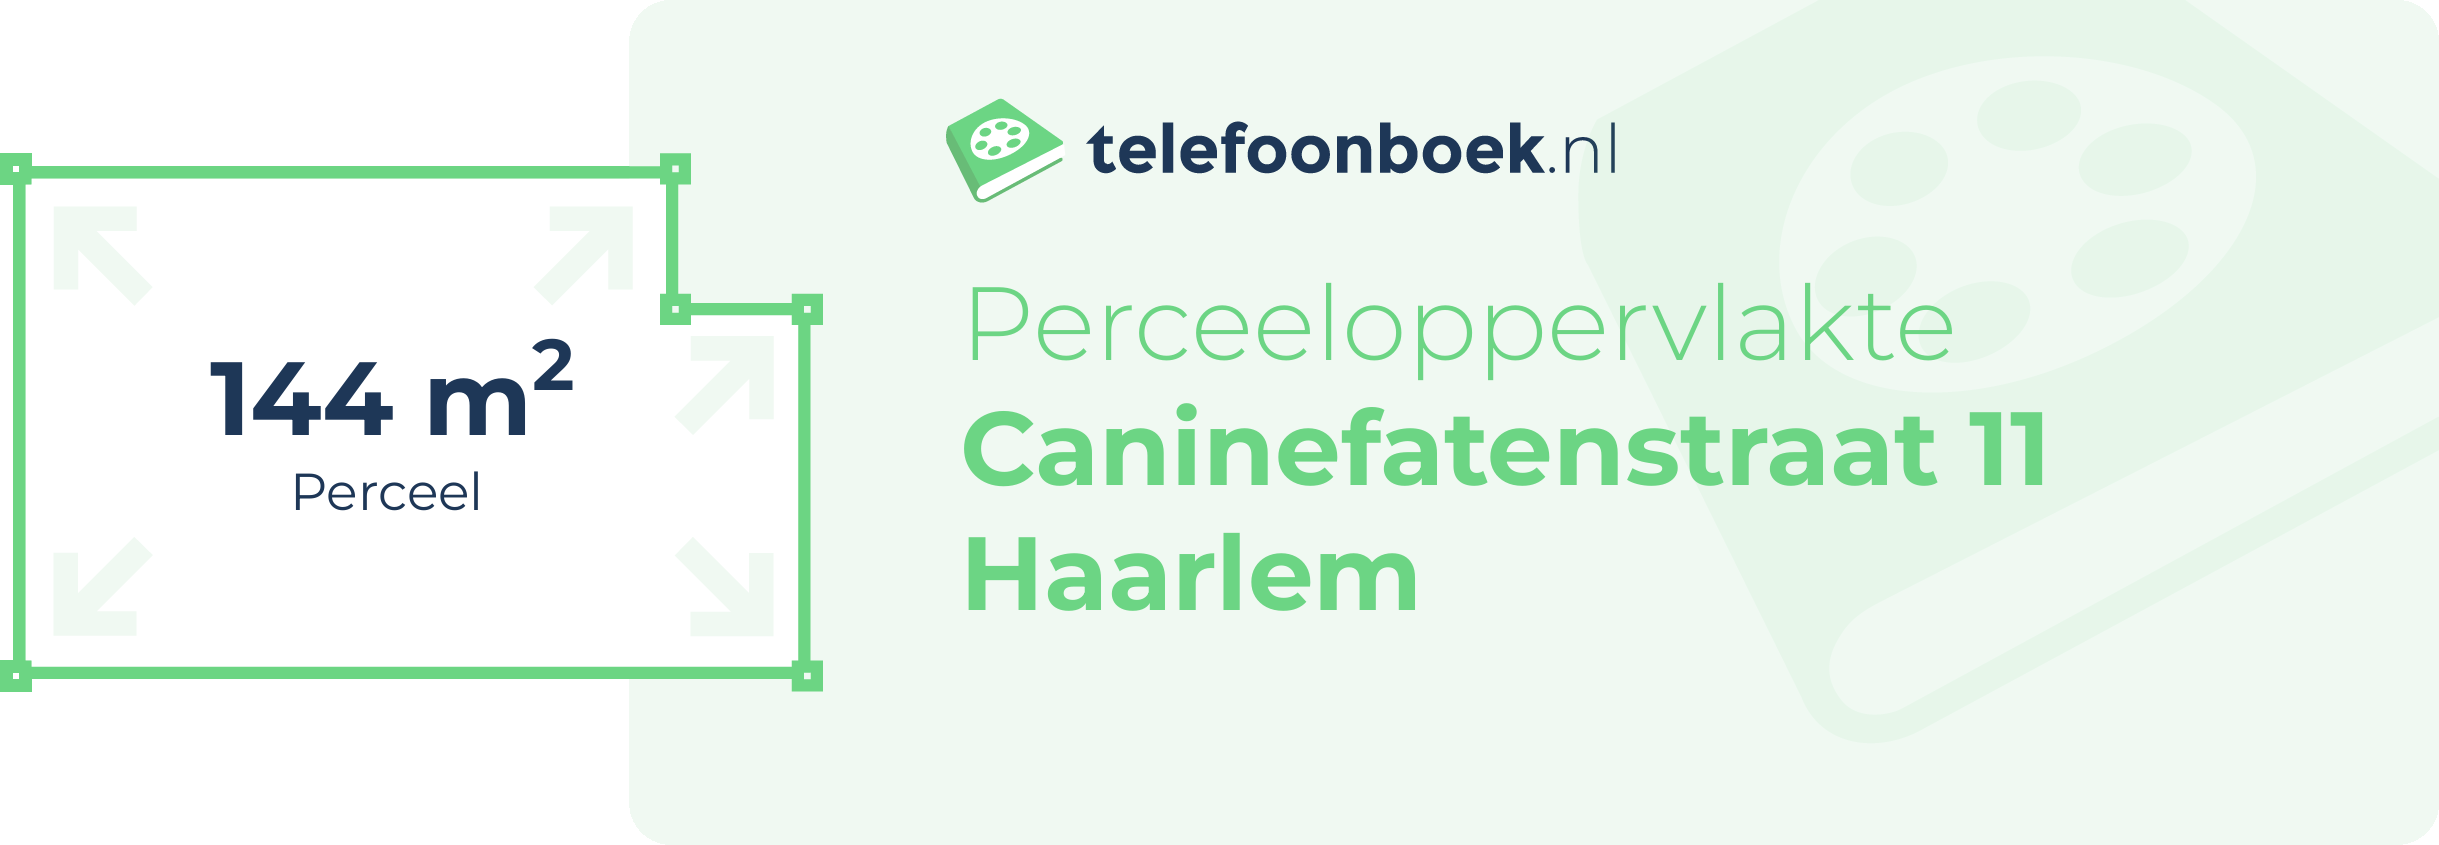 Perceeloppervlakte Caninefatenstraat 11 Haarlem